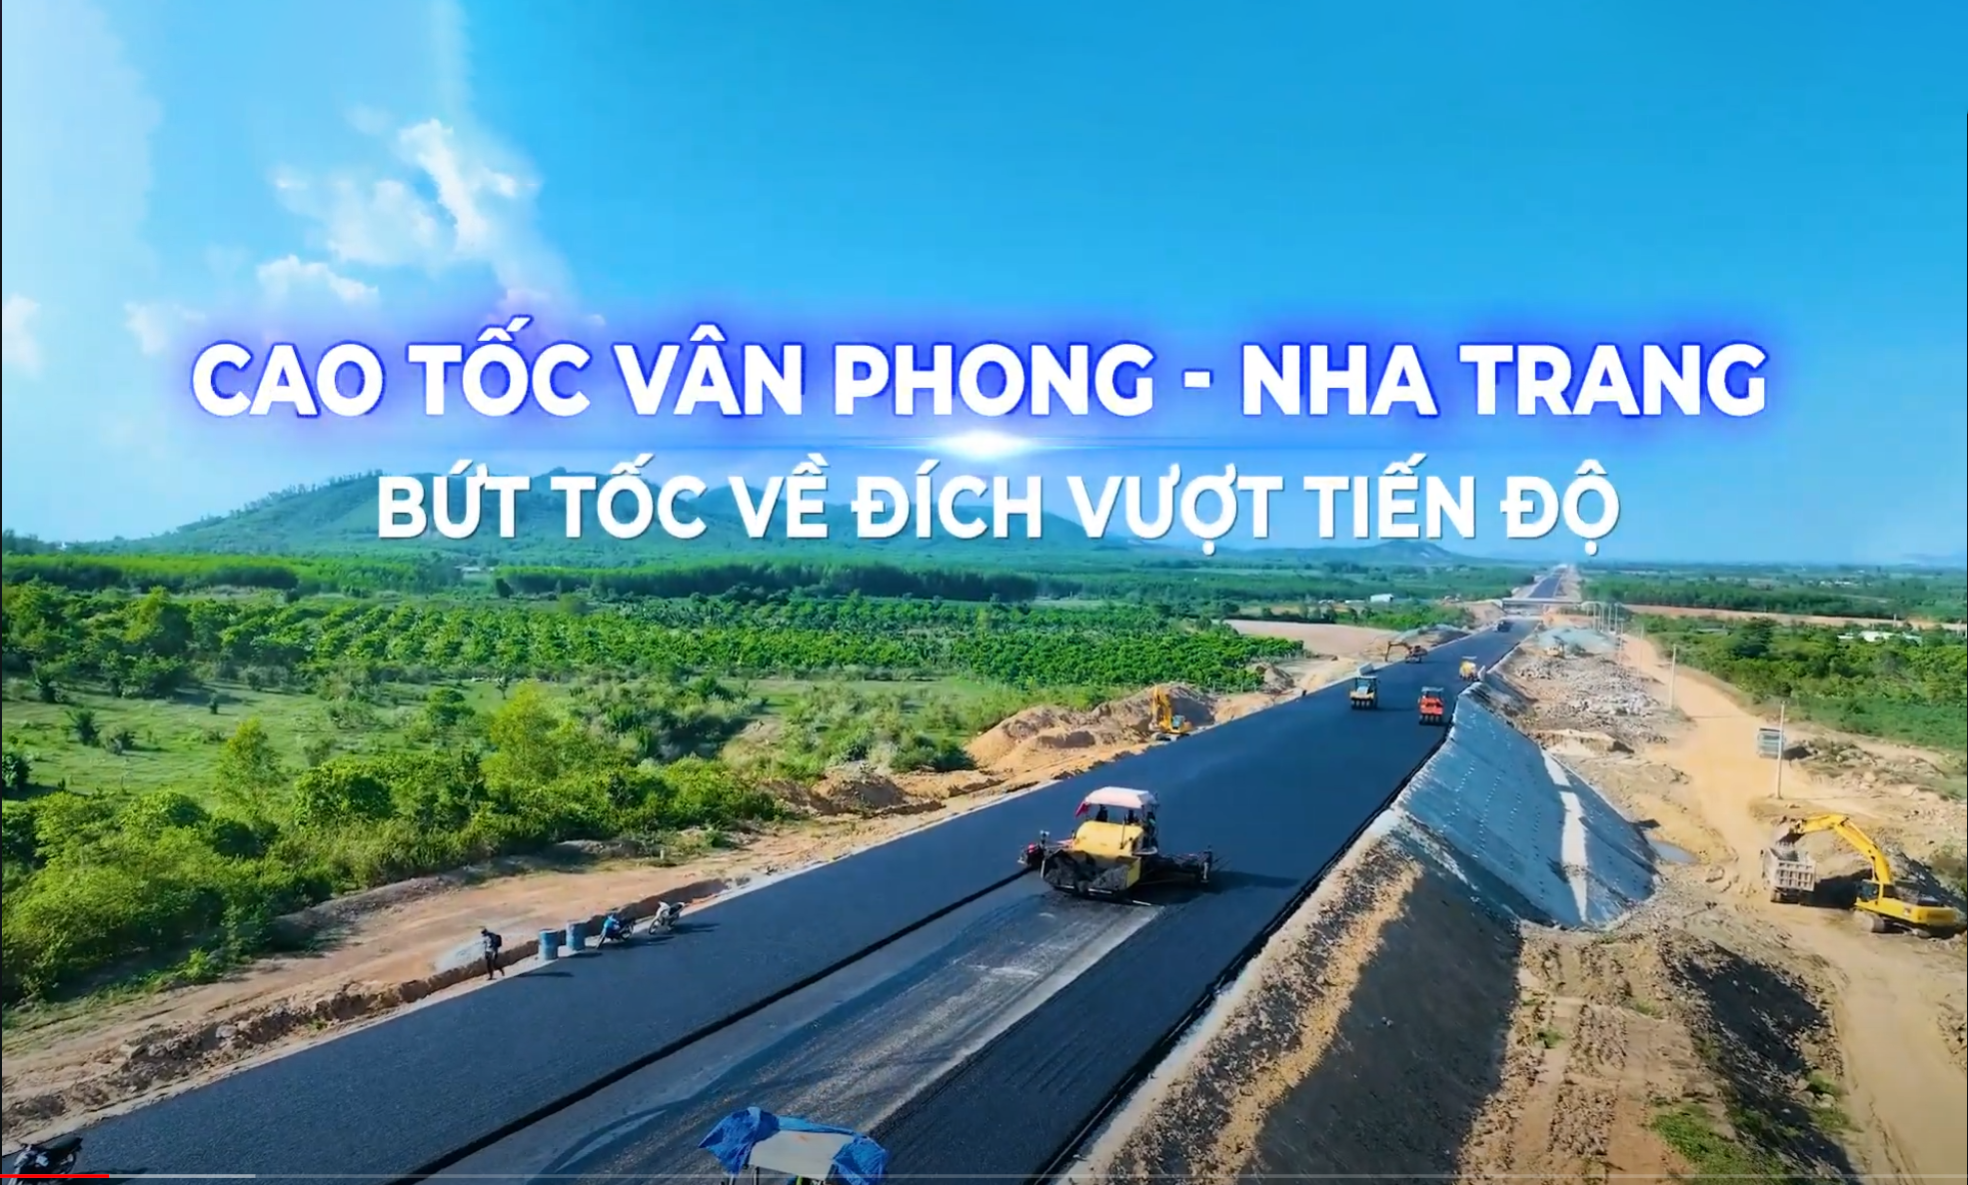 Van Phong - Nha Trang Expressway: Construction is accelerating ahead of schedule